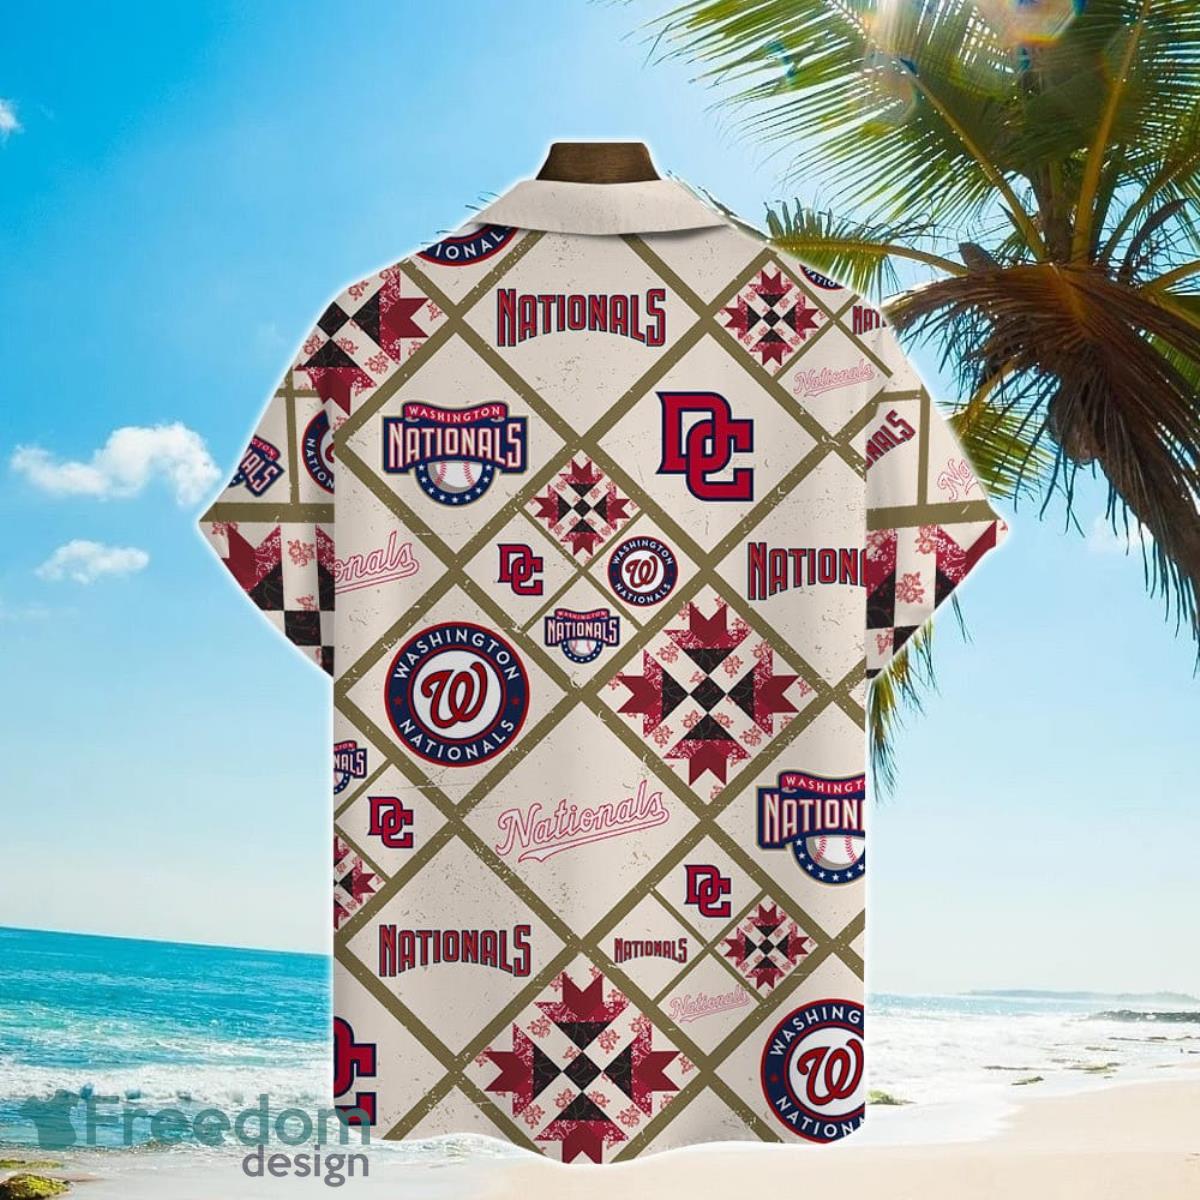 Washington Nationals MLB 3D Baseball Jersey Shirt For Men Women  Personalized - Freedomdesign